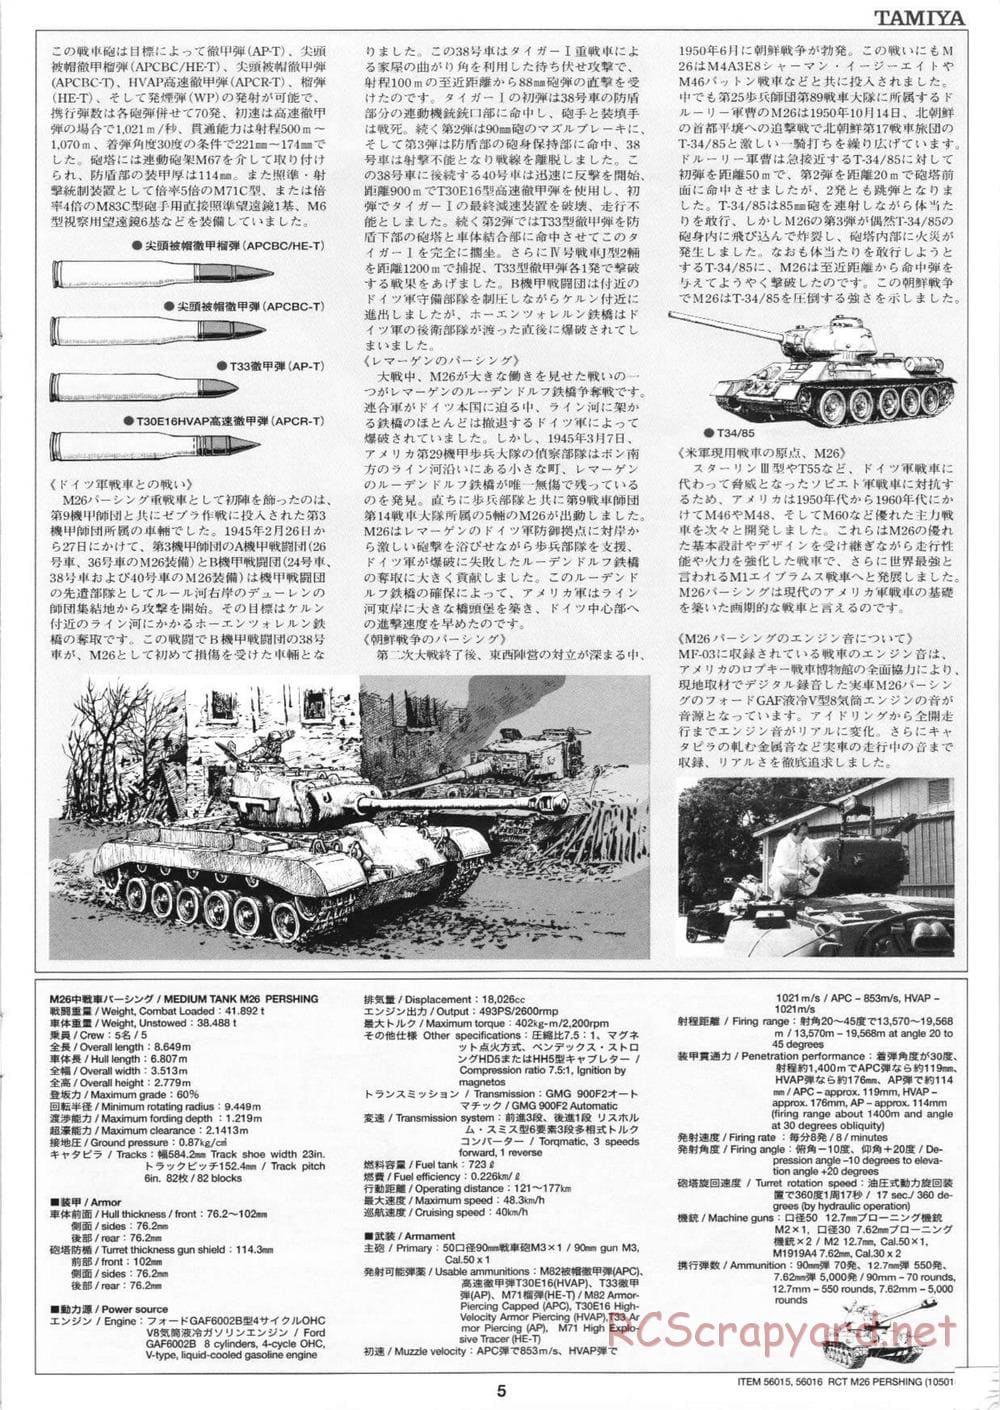 Tamiya - M26 Pershing - 1/16 Scale Chassis - Manual - Page 5